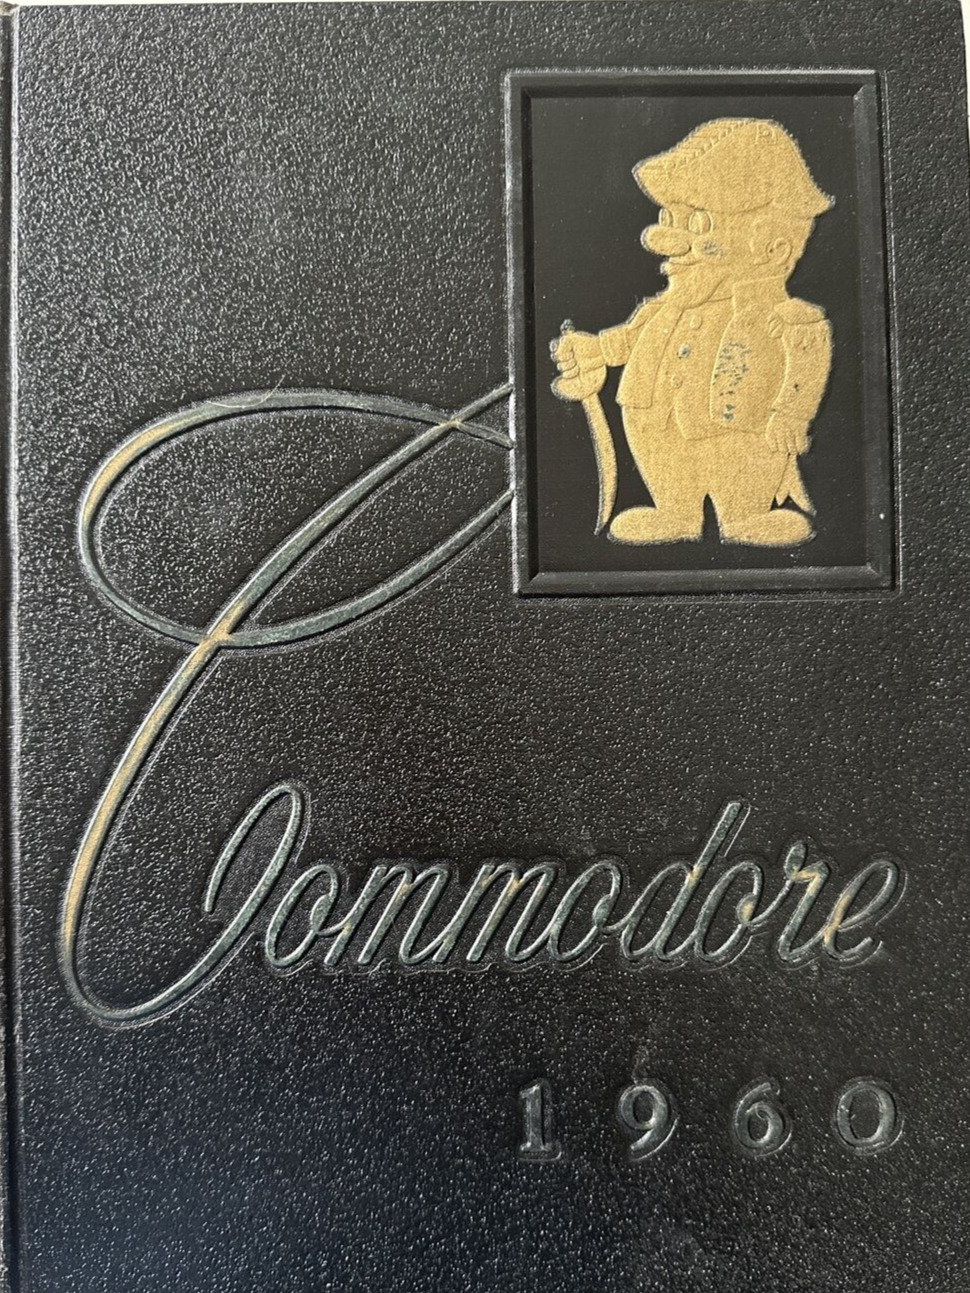 College Yearbook Vanderbilt University Nashville Tennessee Commodore 1960